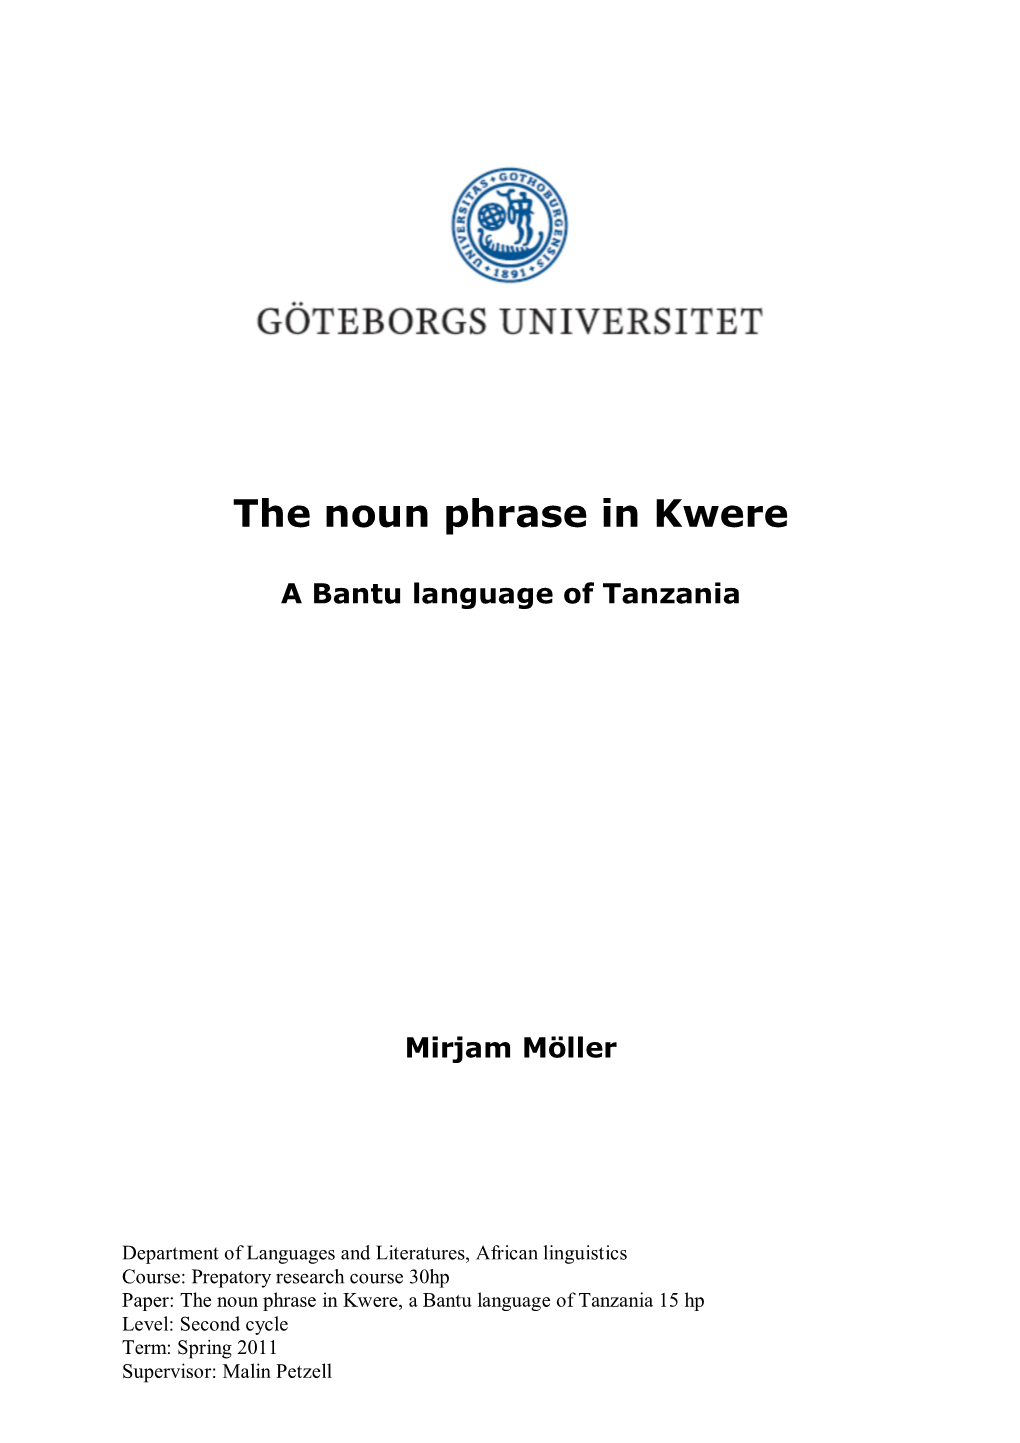 The Noun Phrase in Kwere